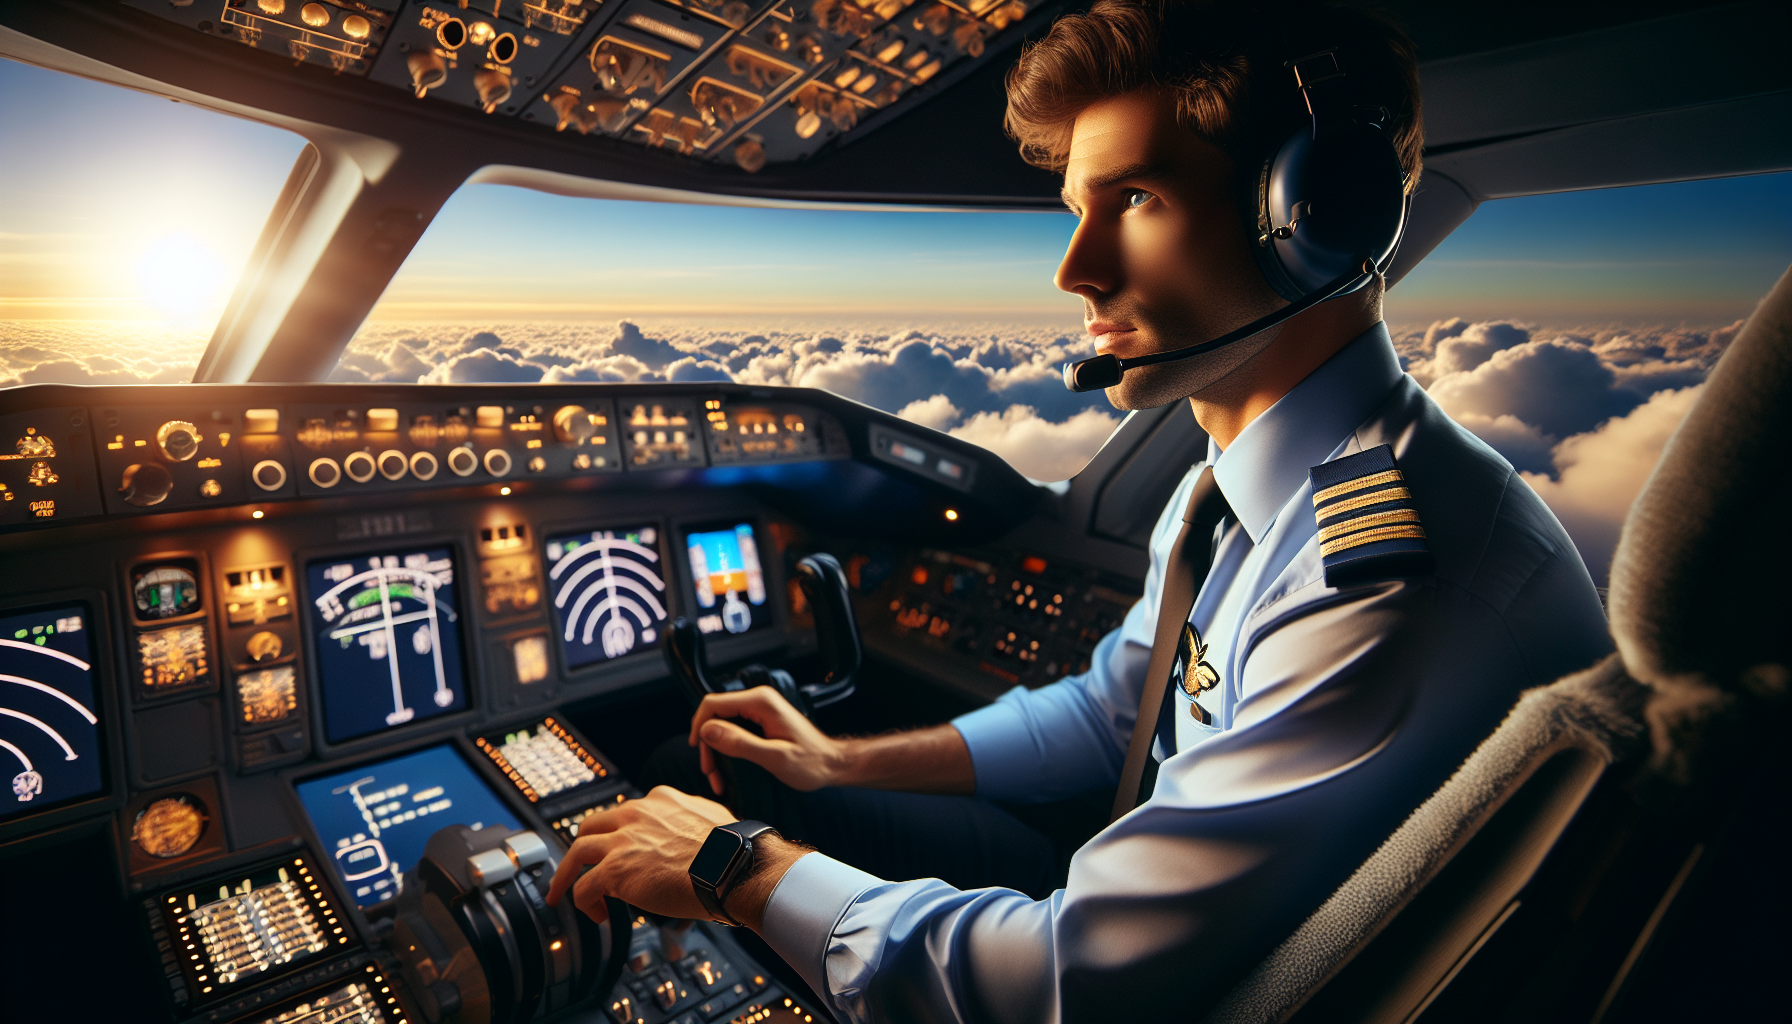 Commercial pilot training